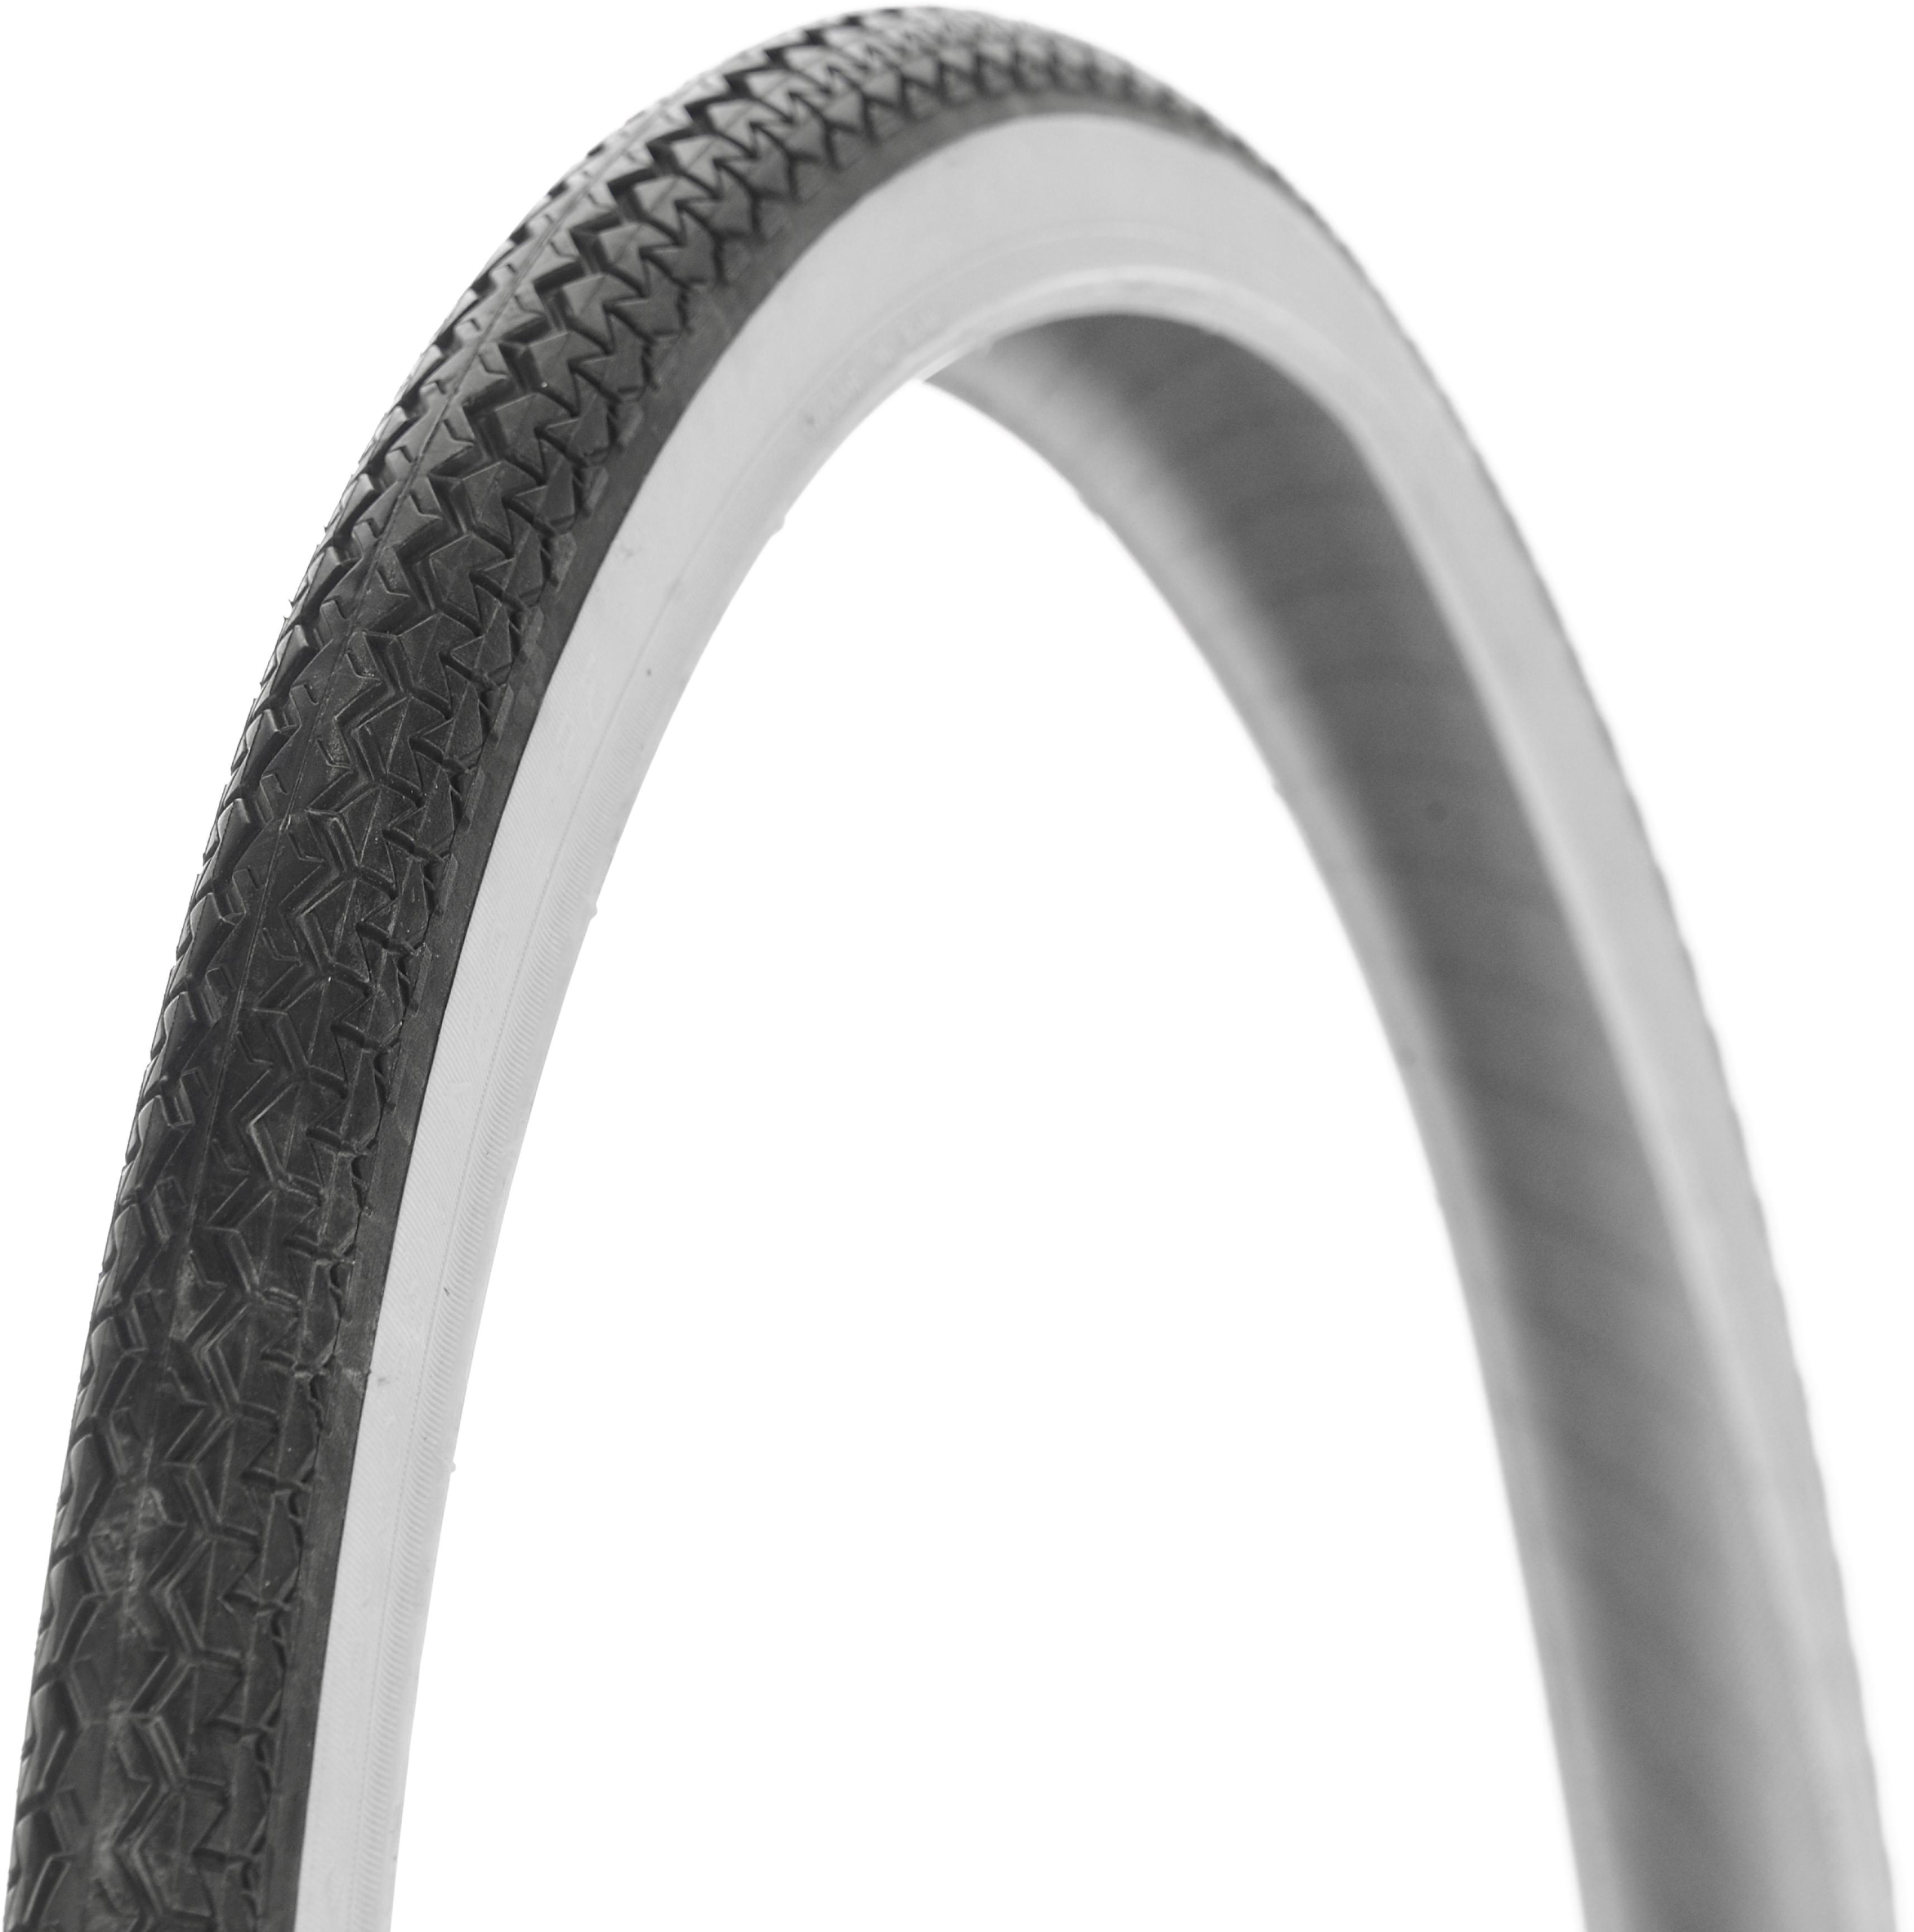 Michelin World Tour Bike Tyre - Black/white